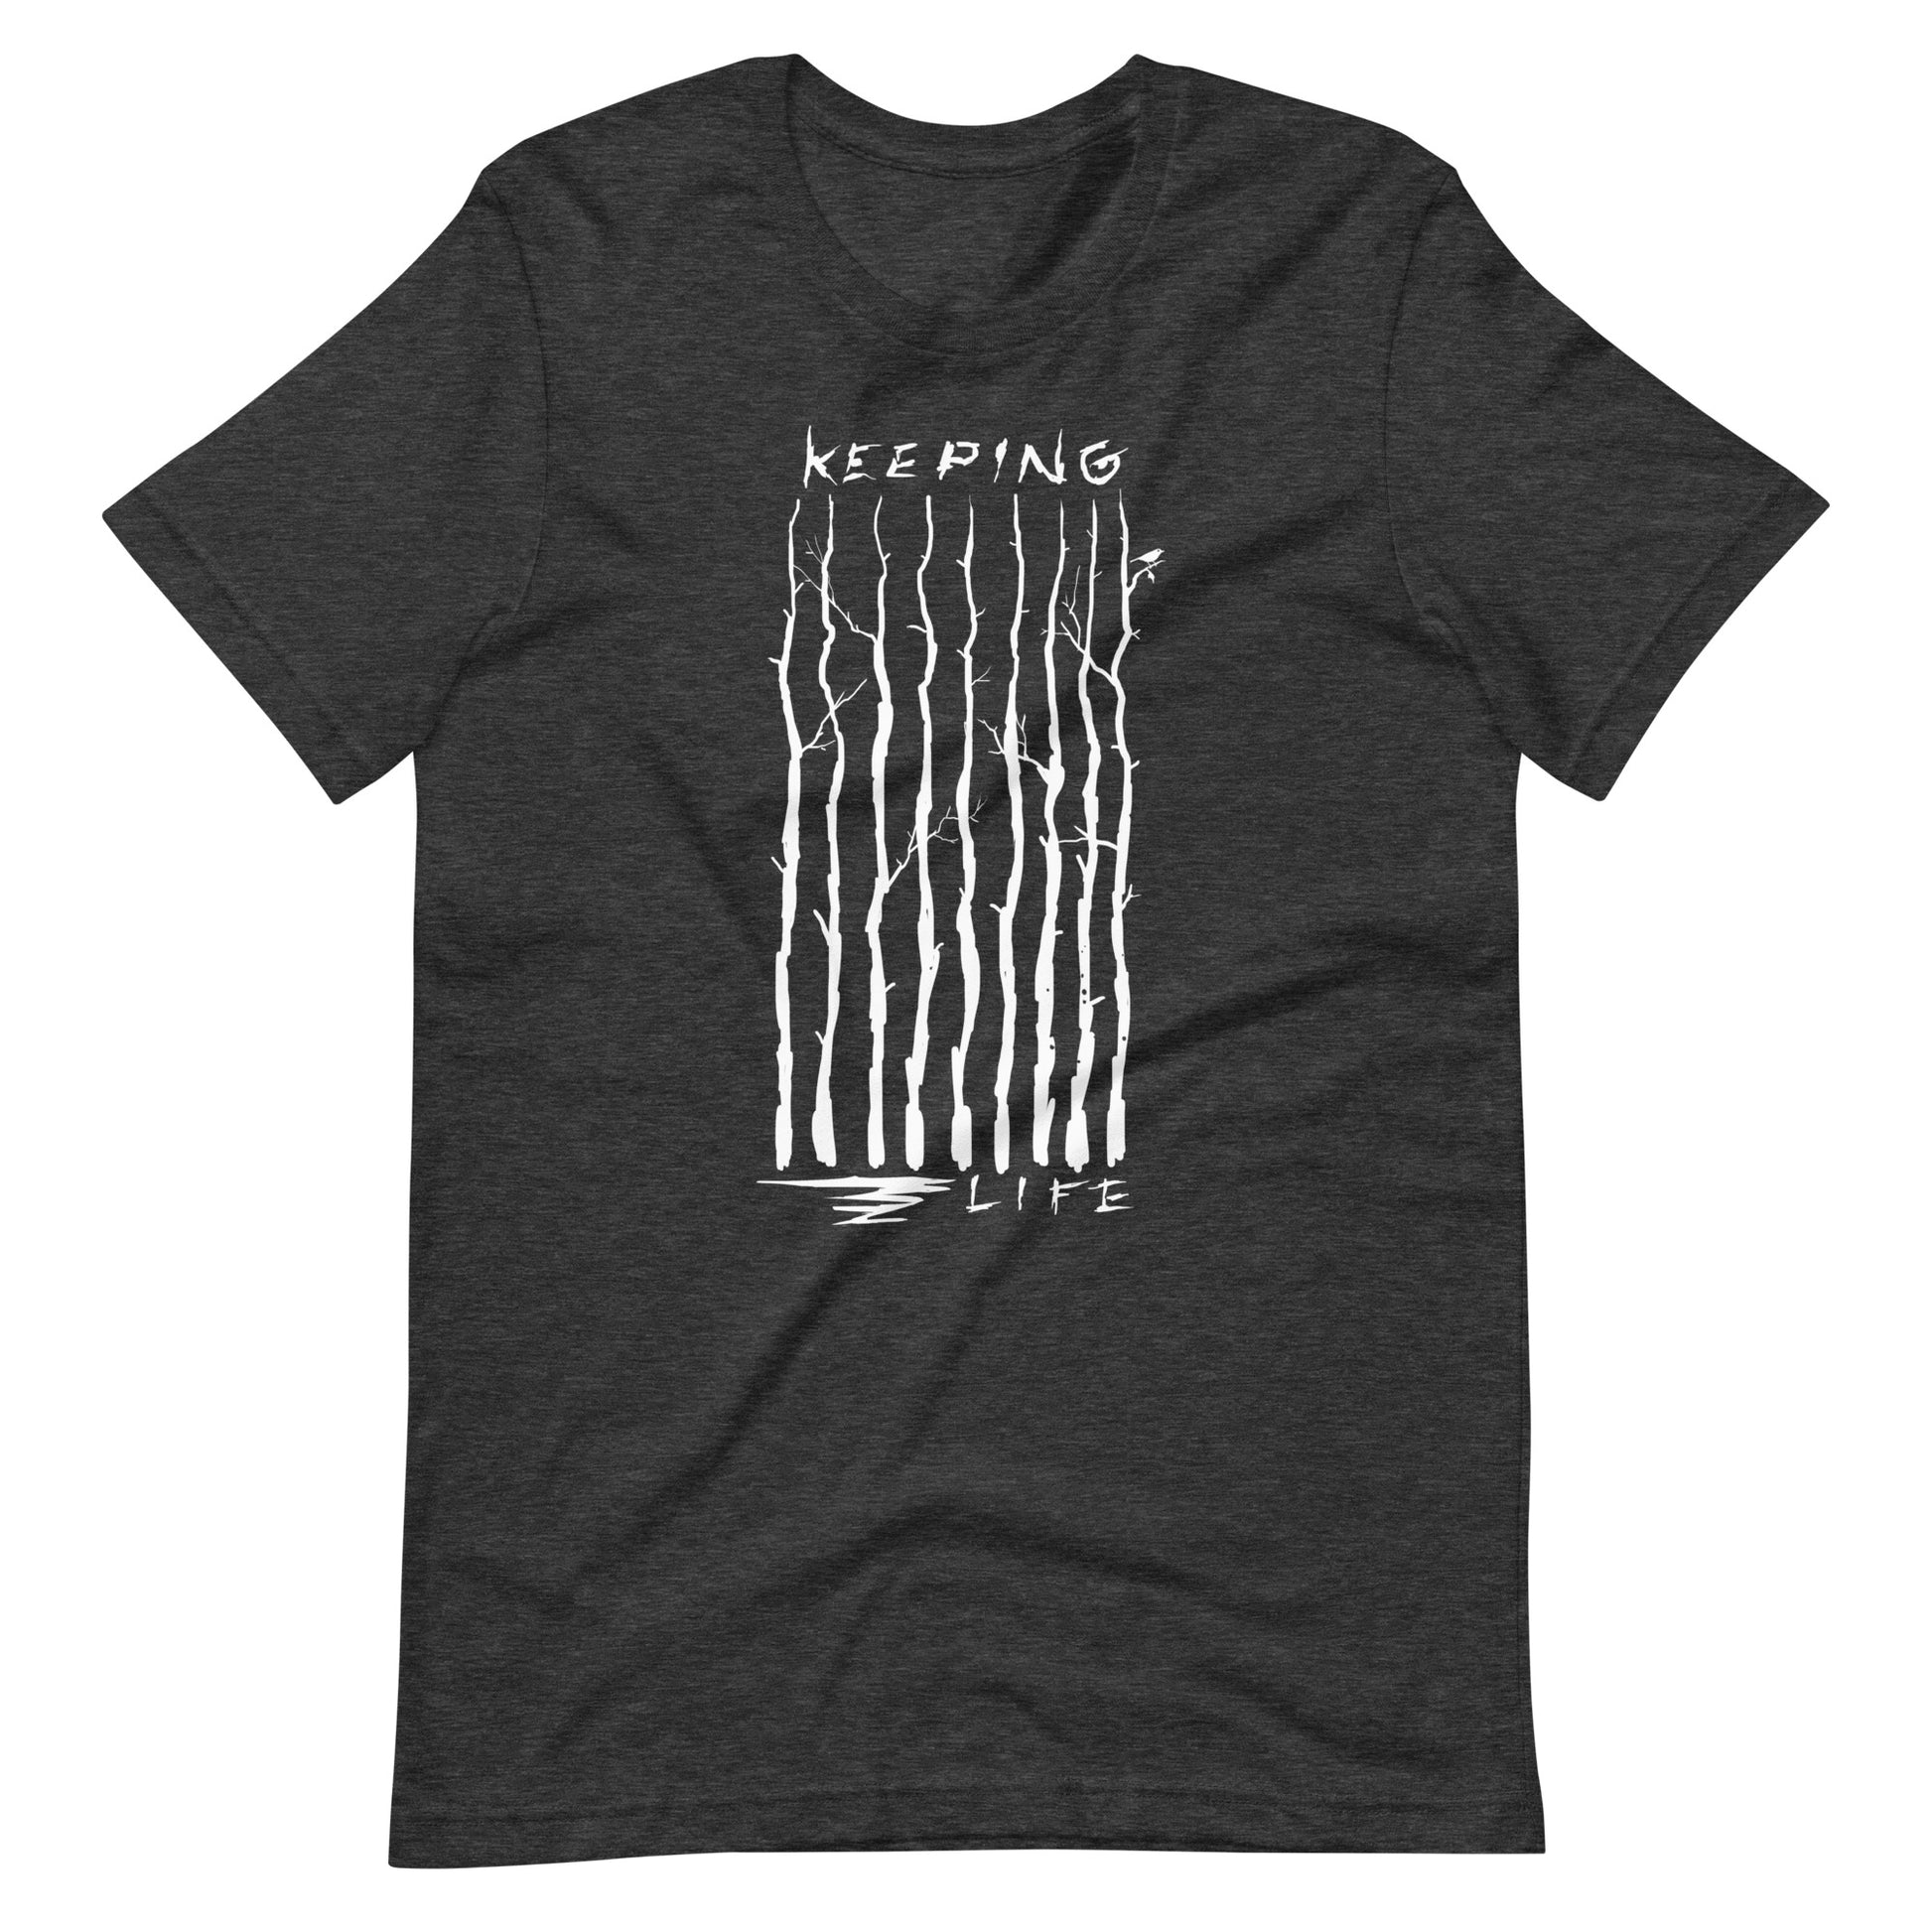 Keeping Lift - Men's t-shirt - Dark Grey Heather Front